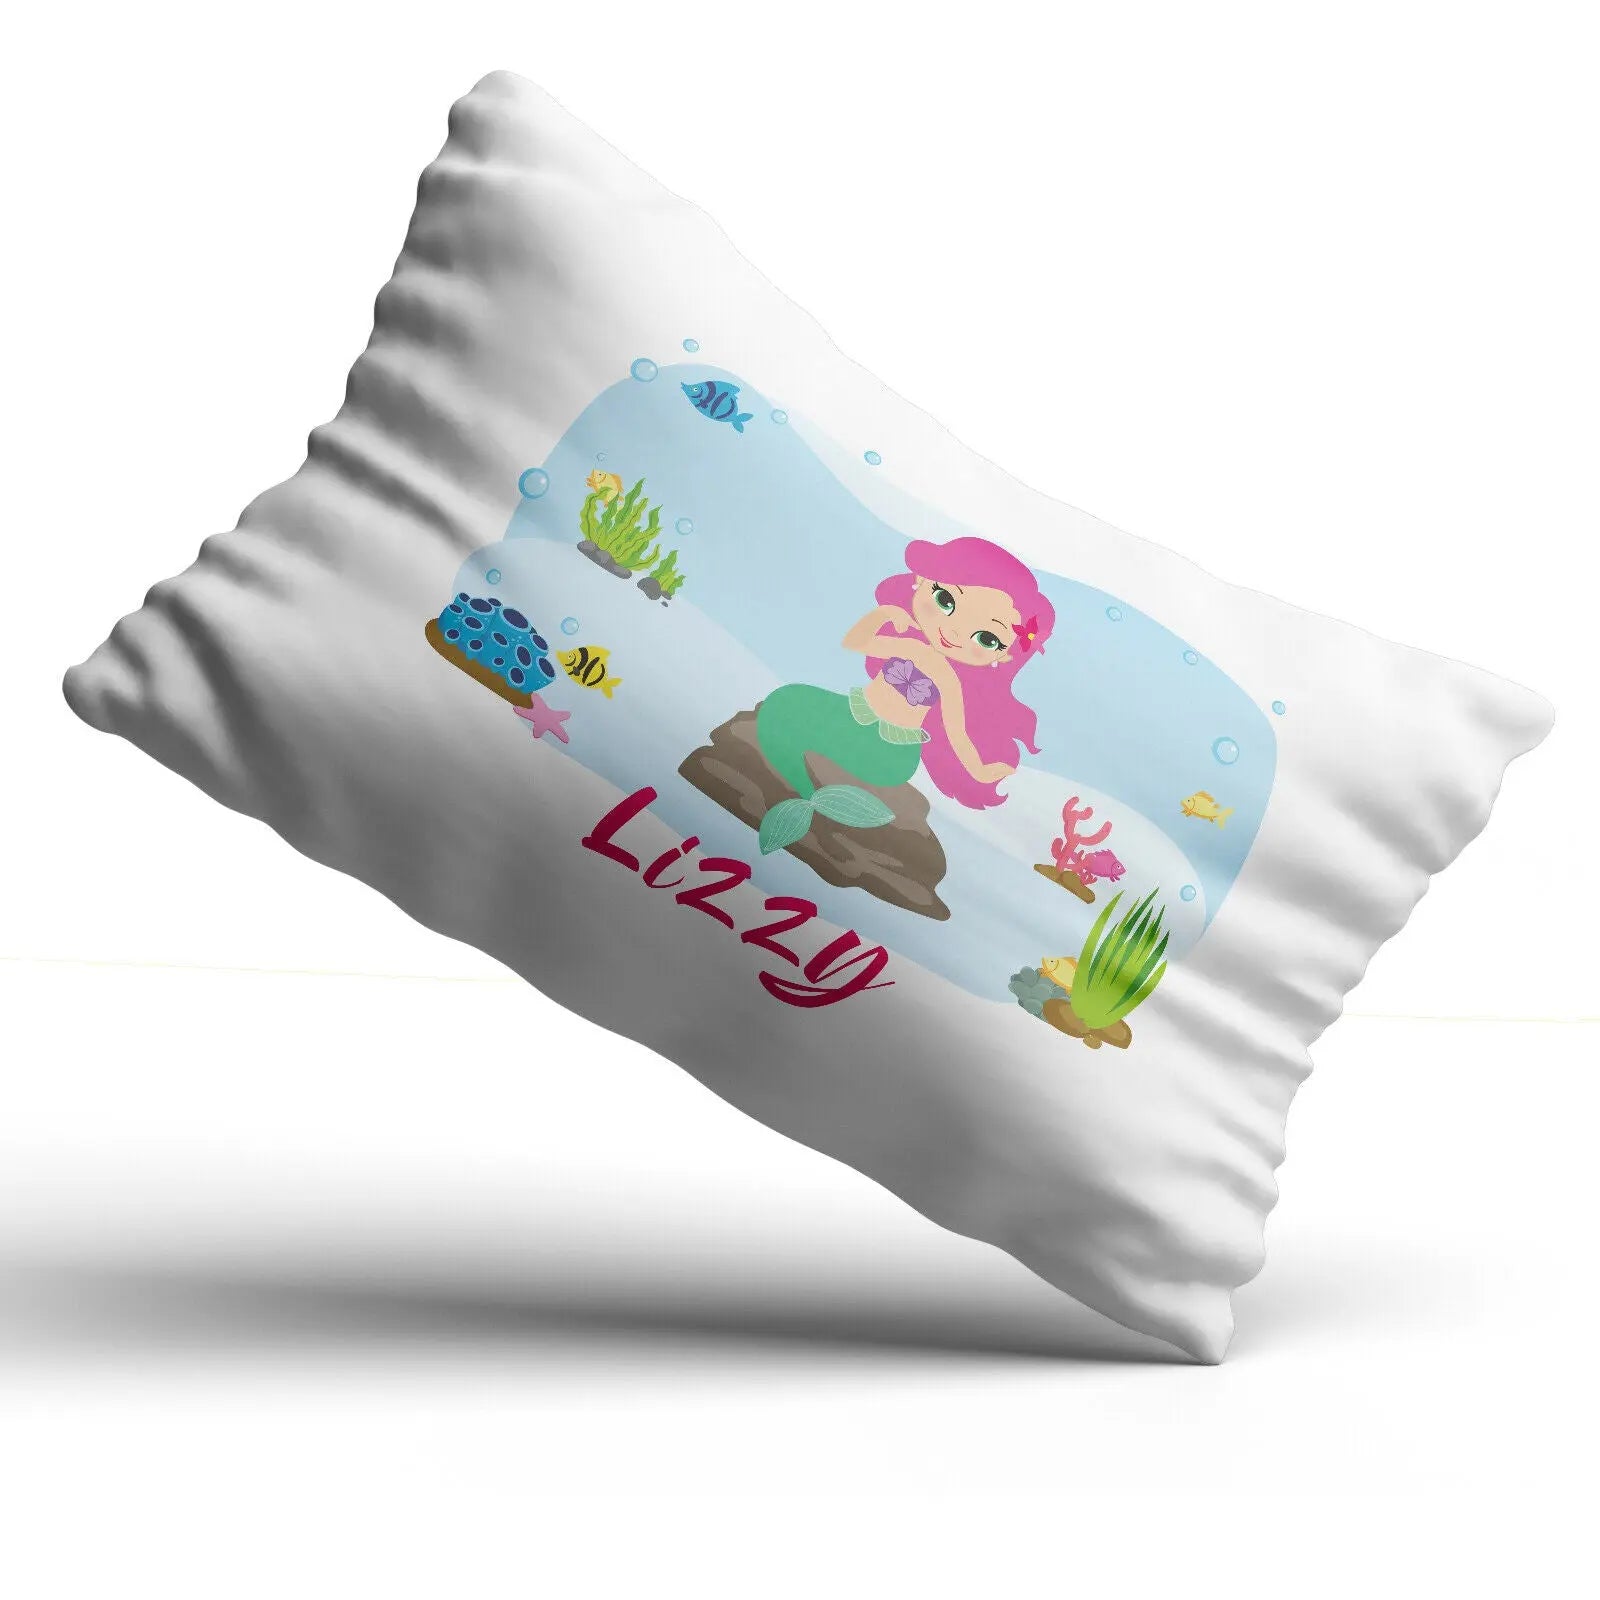 Personalised Mermaid Pillow Case Printed Gift Children Custom Print - Pink Hair